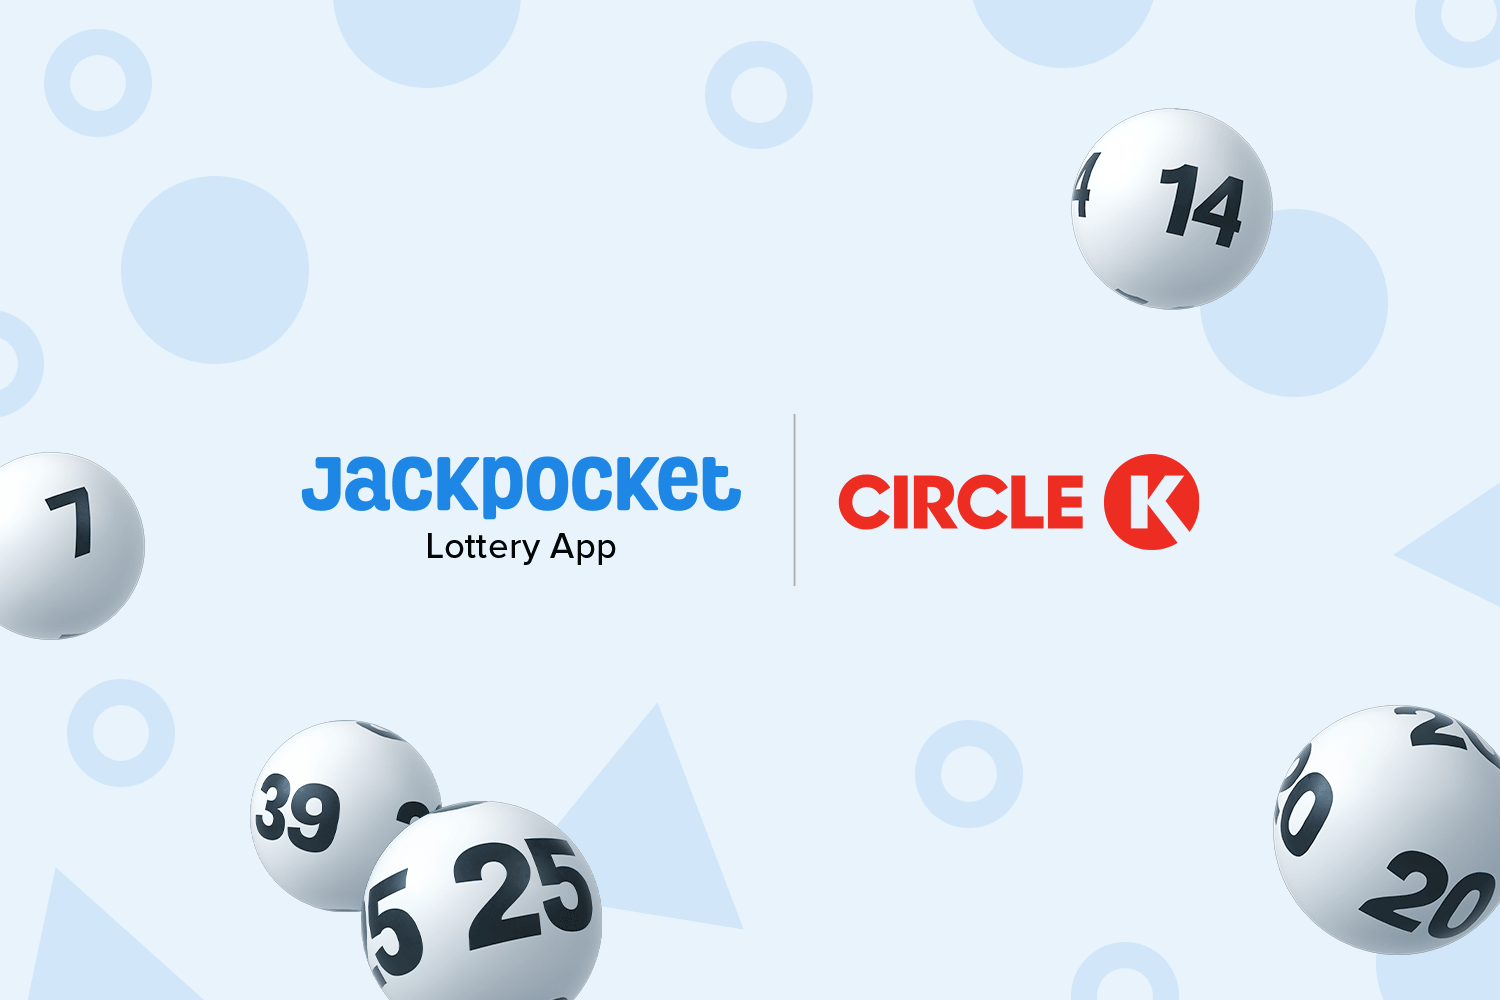 Jackpocket lottery app and Circle K